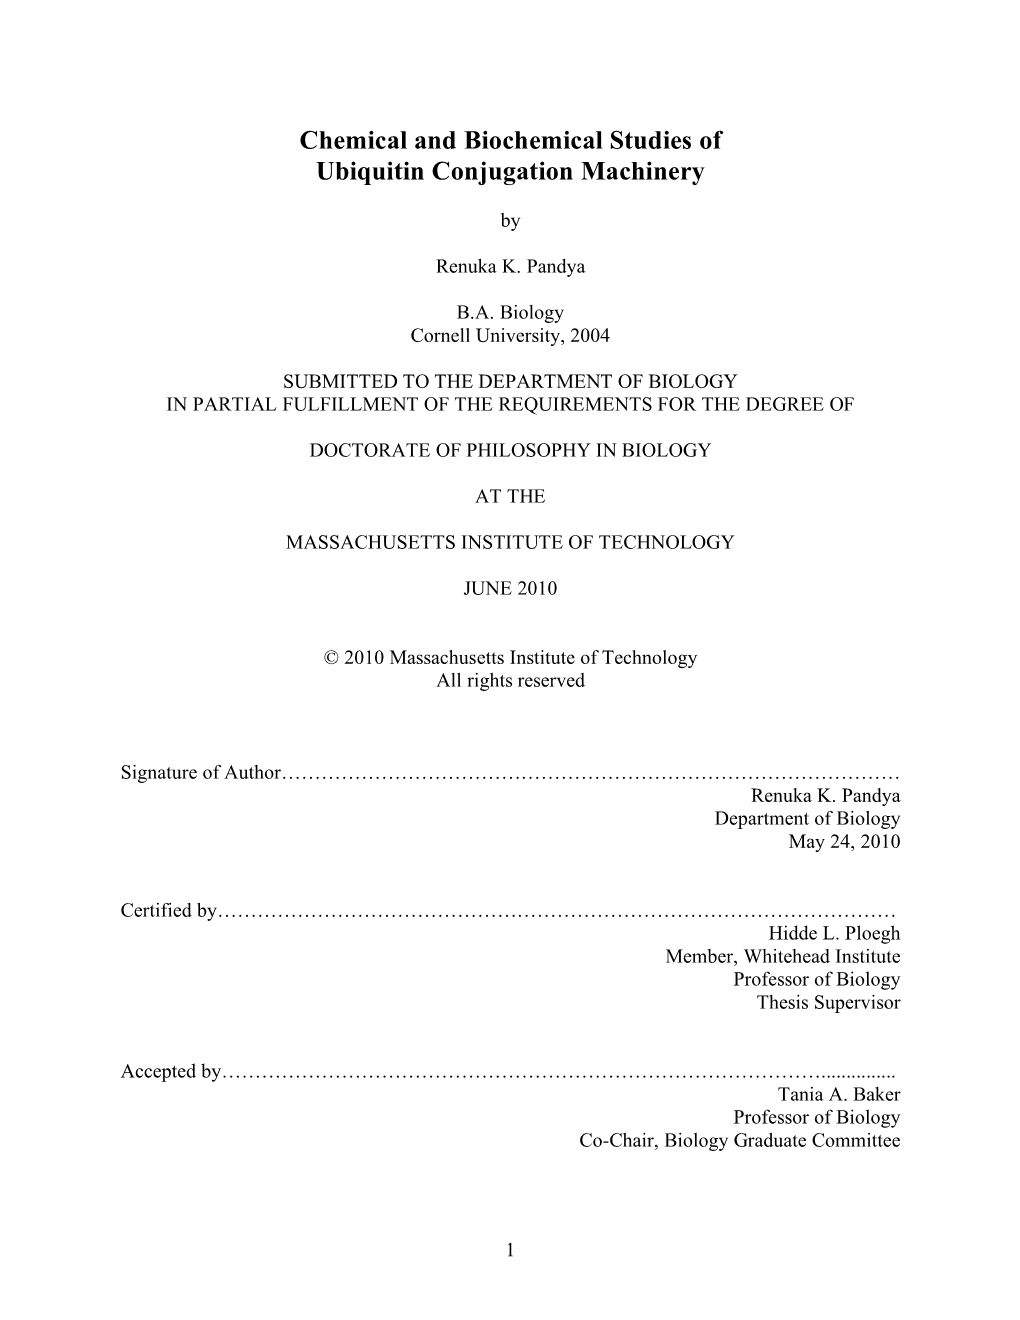 Chemical and Biochemical Studies of Ubiquitin Conjugation Machinery